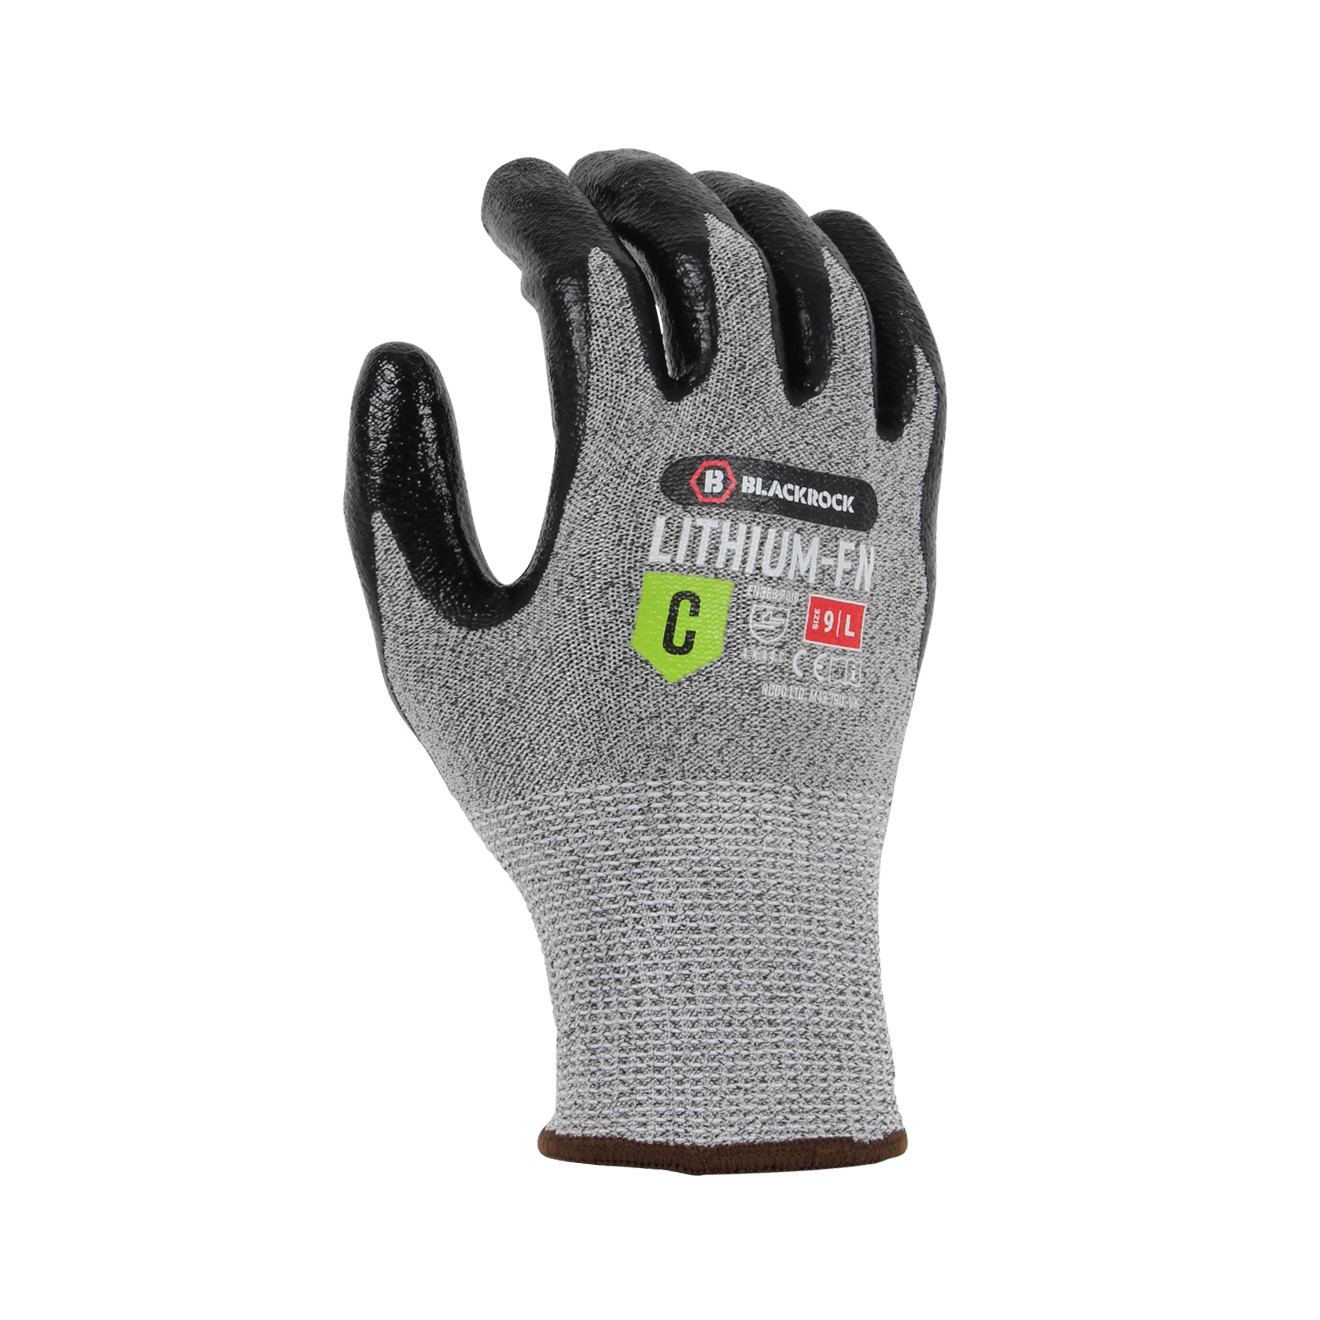 Lithium-FN Cut Resistant Glove